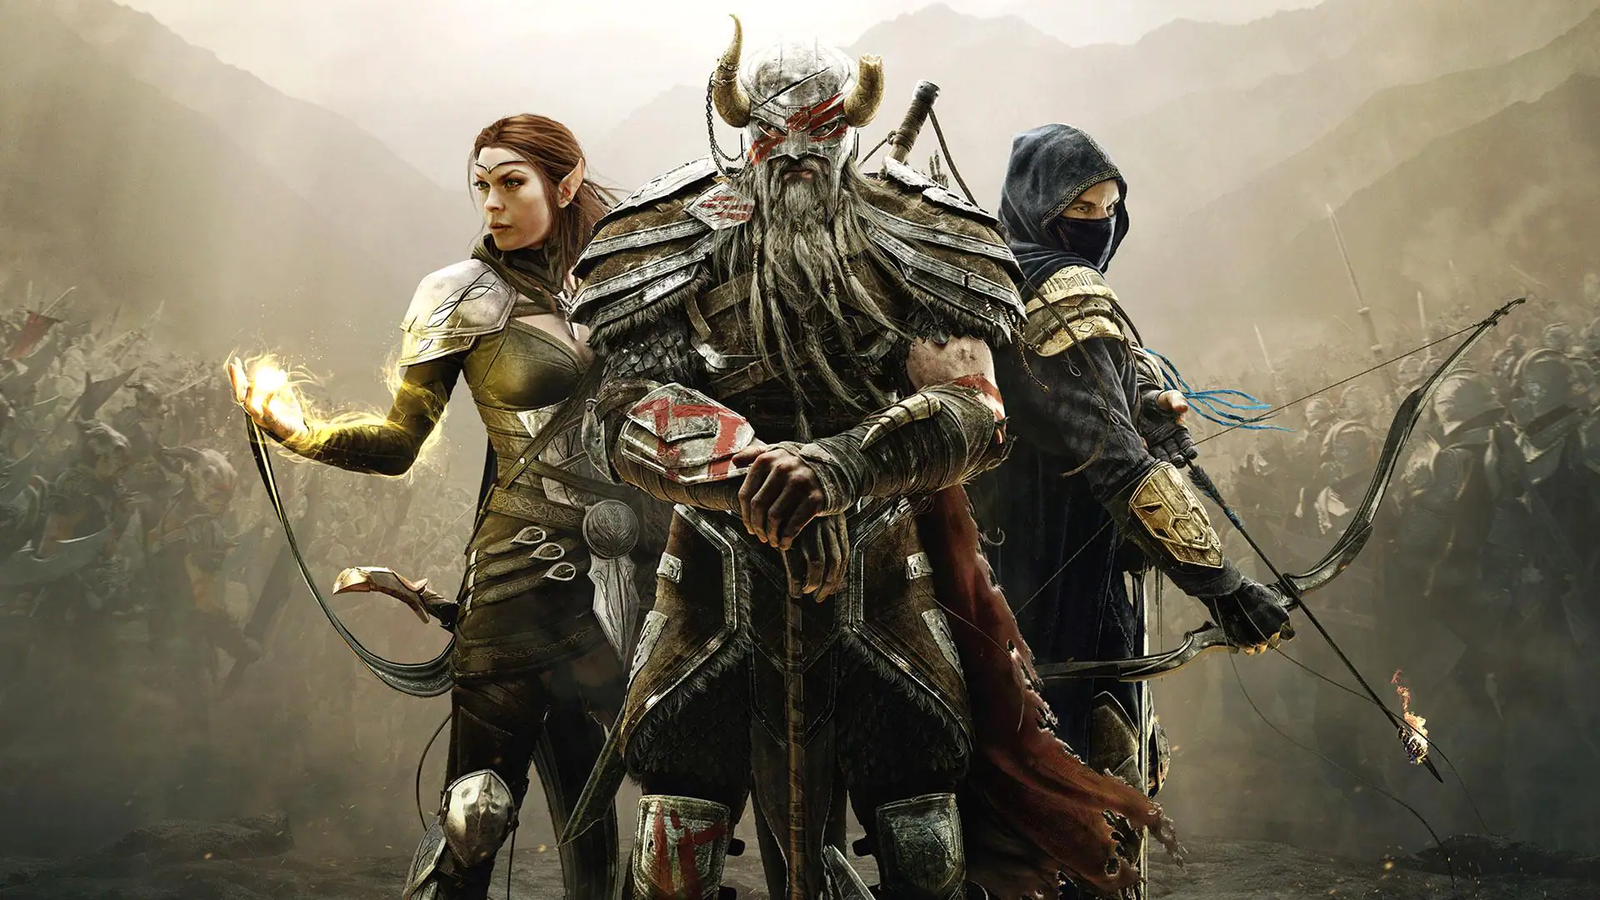 elder scrolls online zenimax follow up three warriors pose